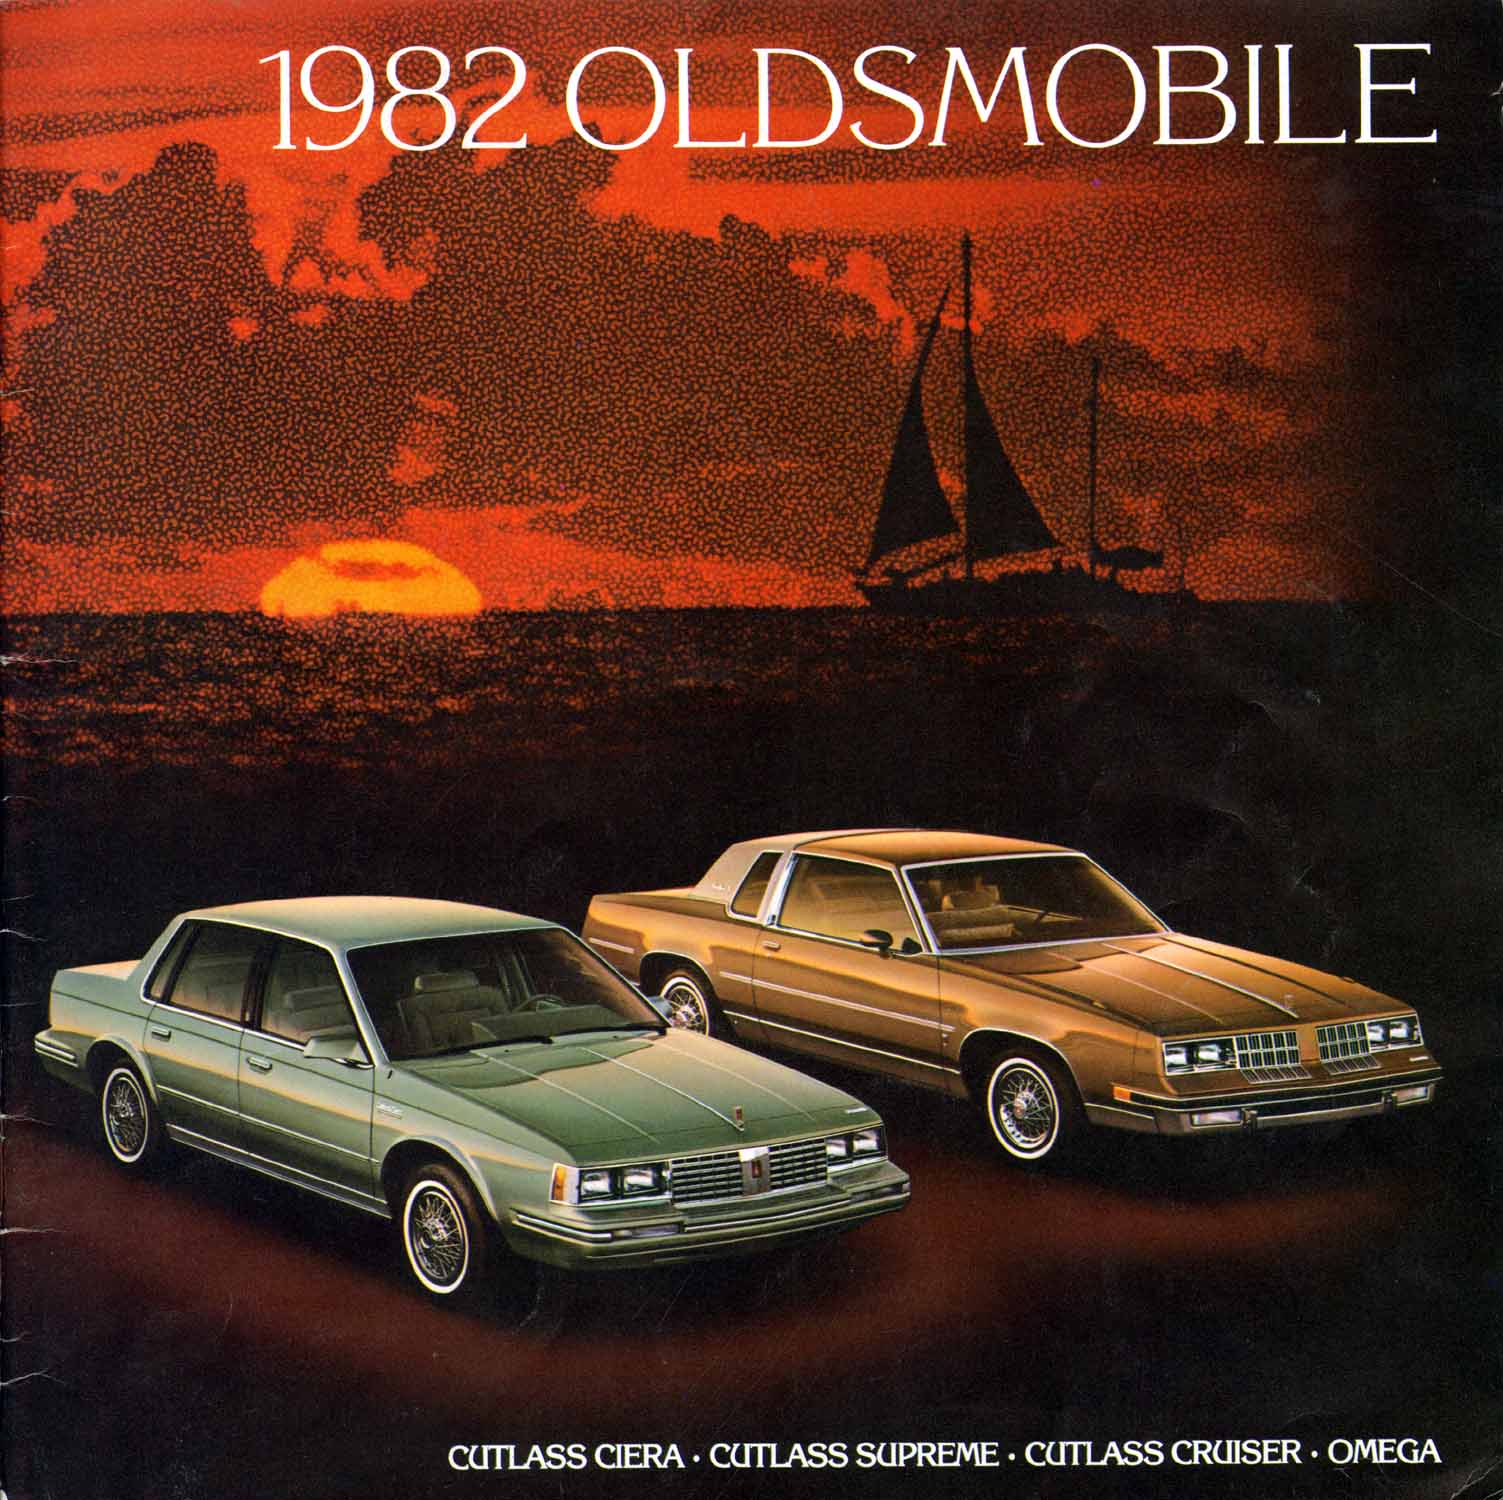 1982 Oldsmobile Small Size Brochure